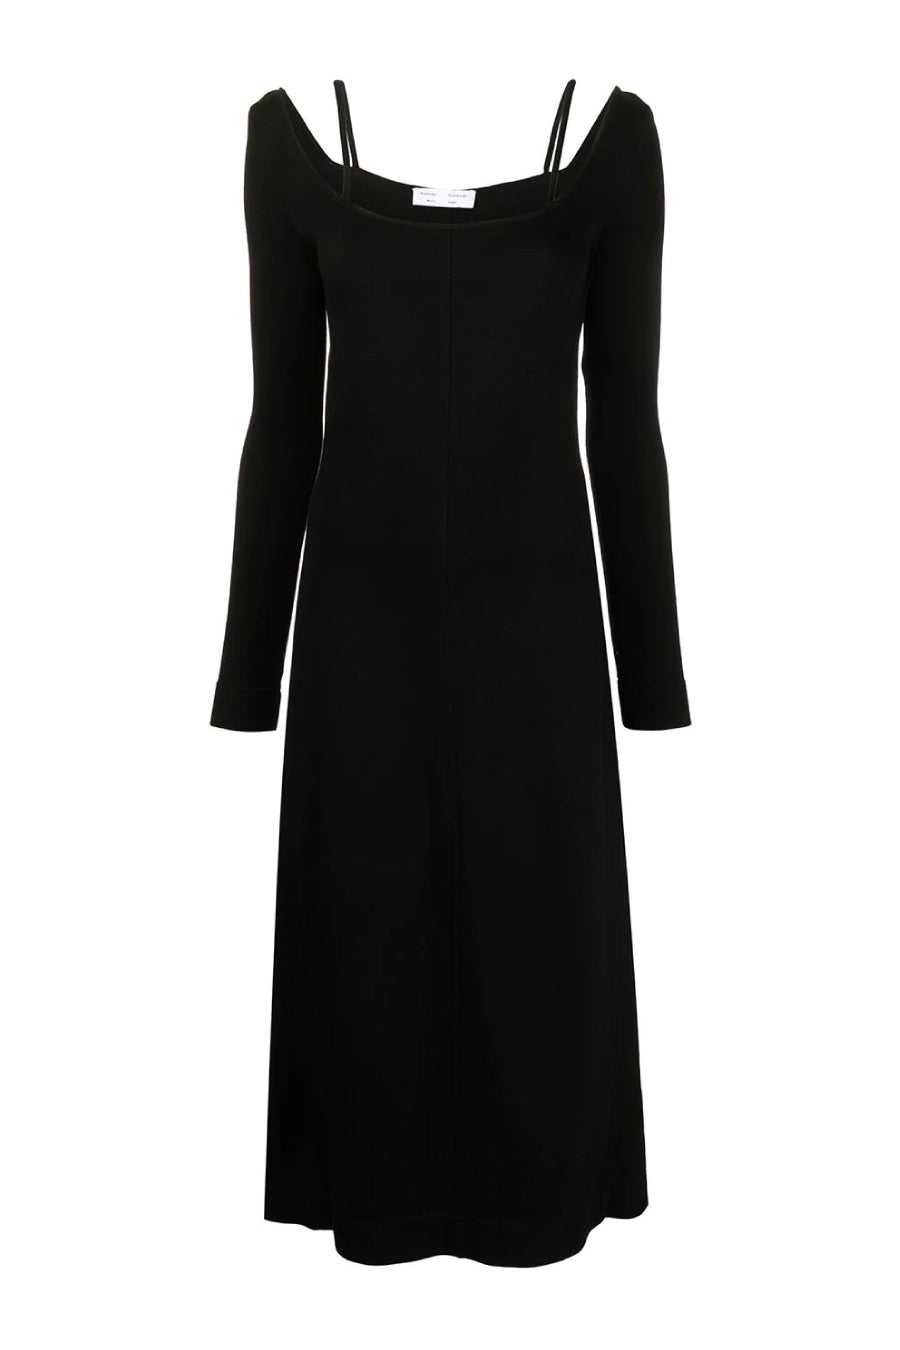 Proenza Schouler White Label Beatrice sleeveless midi dress - Black